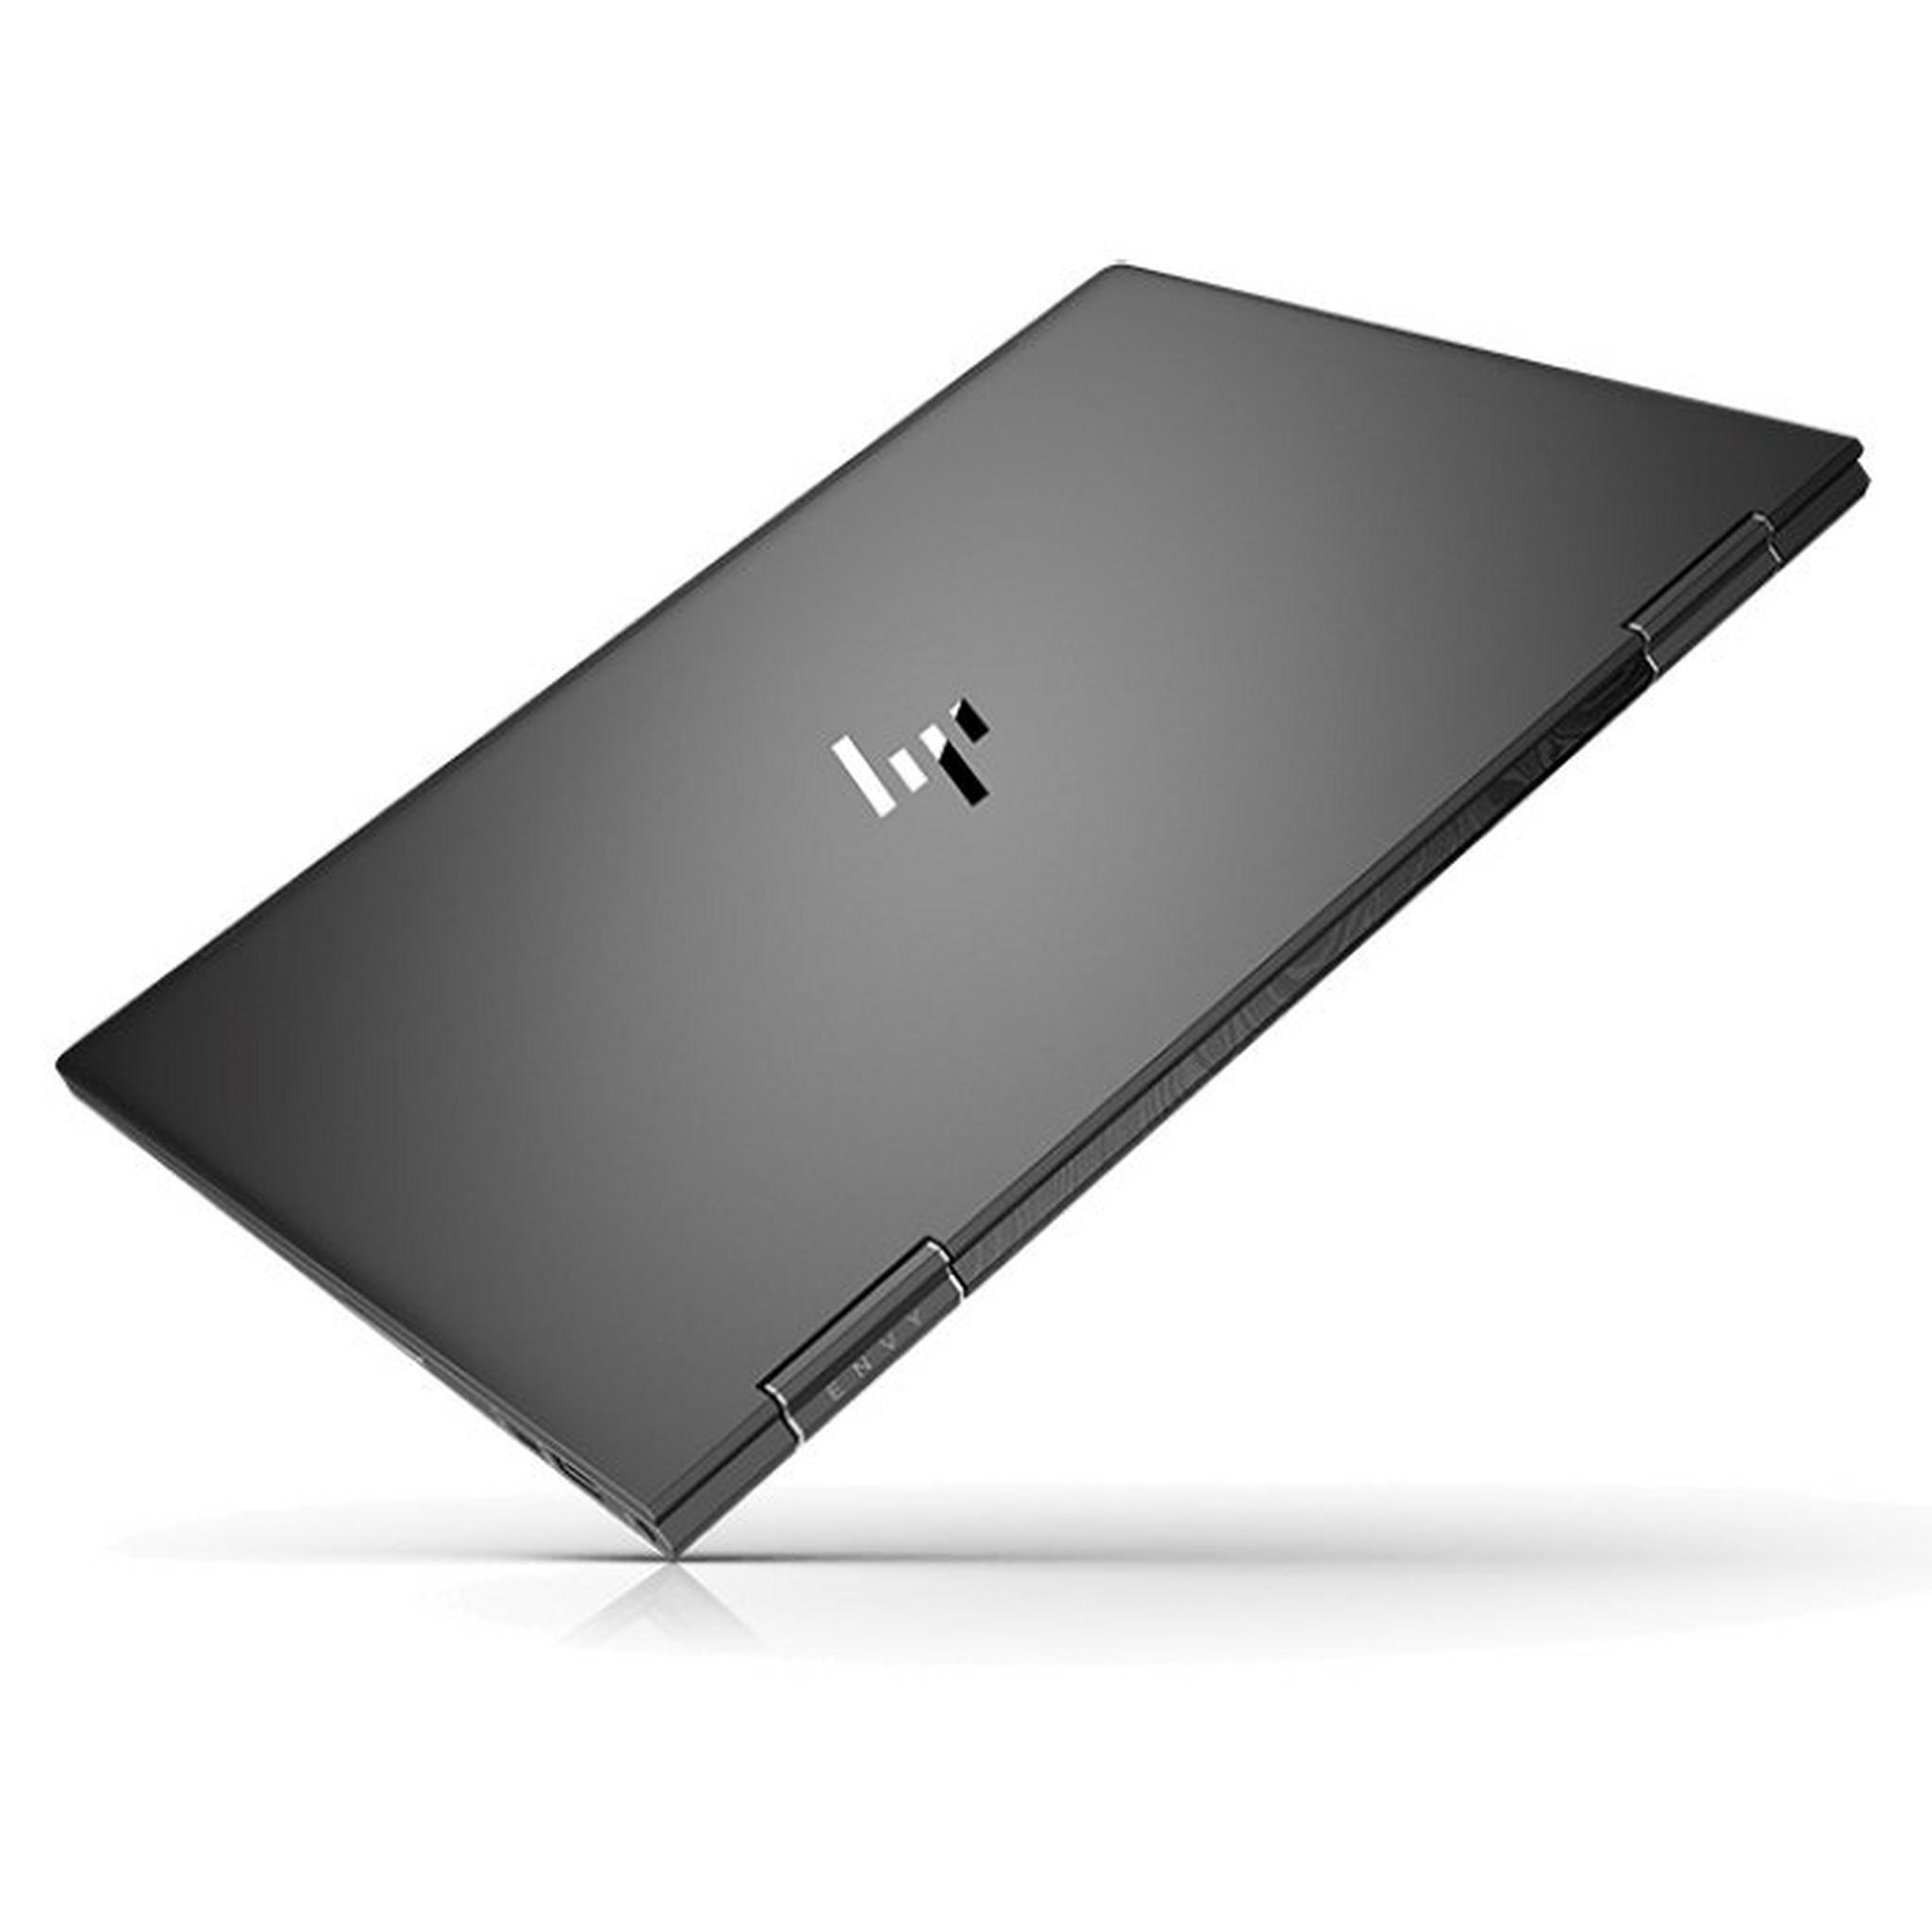 HP Envy x360 Ryzen 5 5th Gen, 8GB RAM, 256GB SSD, 13.3-inch Convertible Touch Laptop - Black